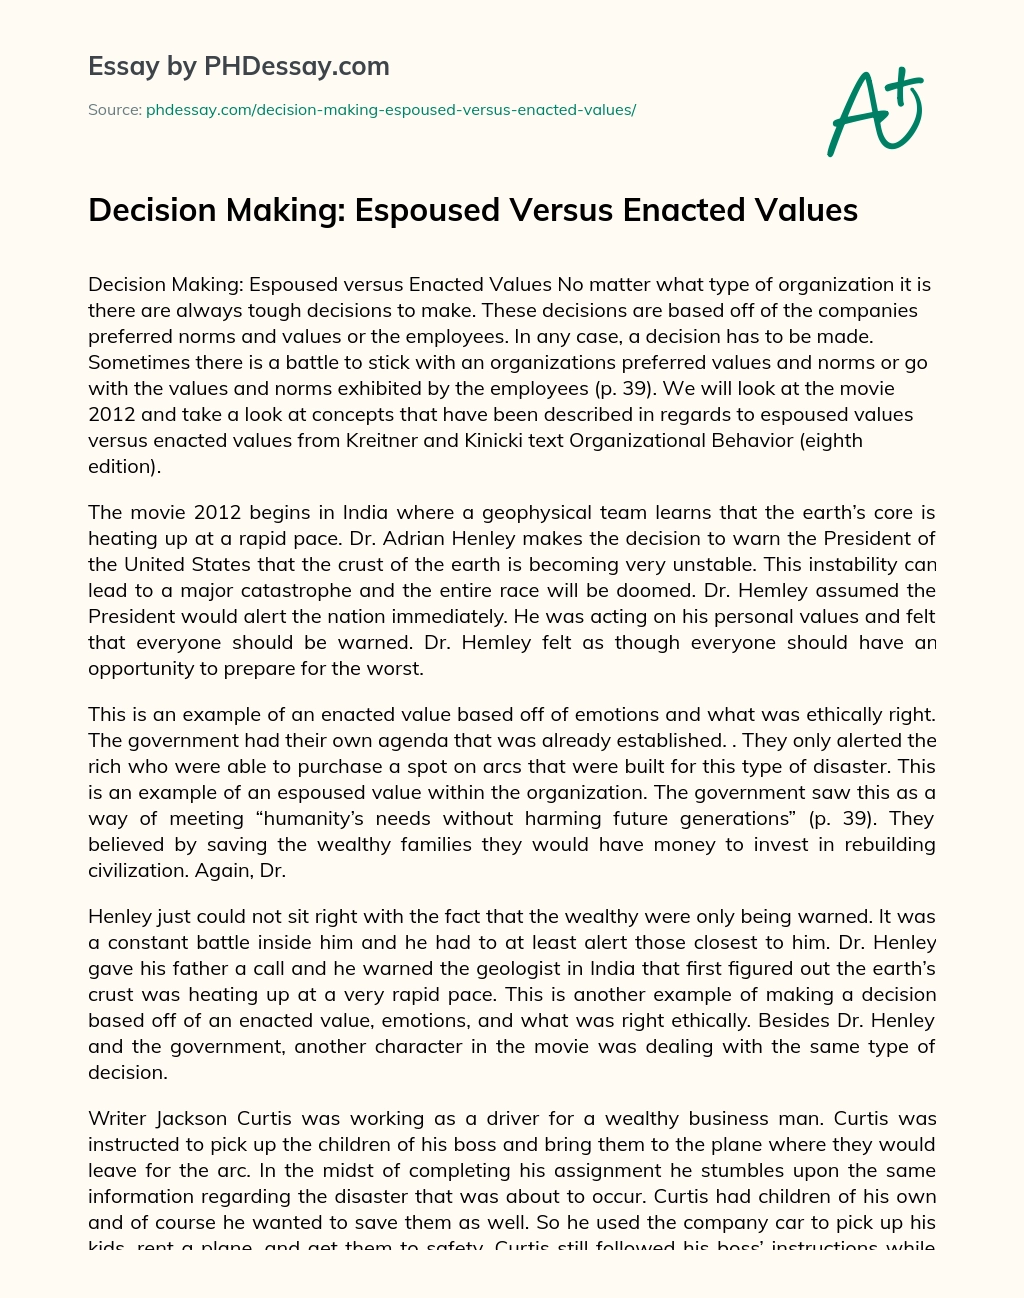 Decision Making: Espoused Versus Enacted Values essay